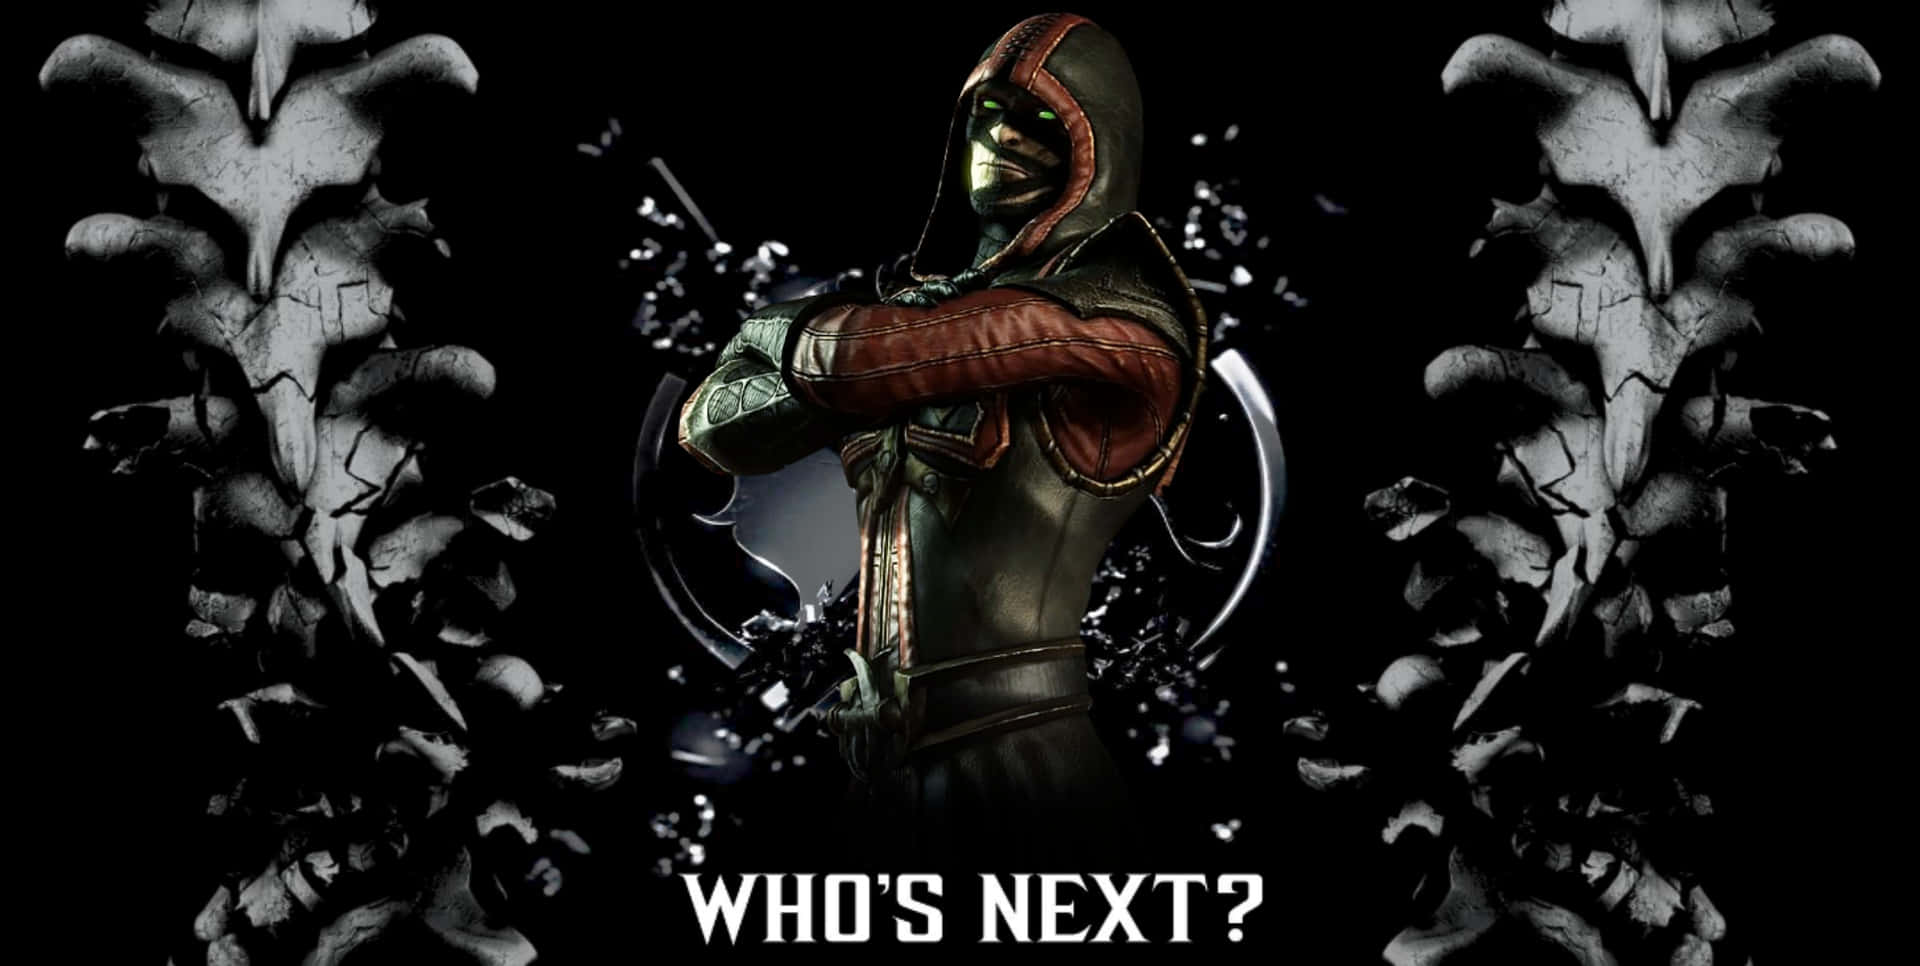 Ermac, the powerful telekinetic ninja warrior in Mortal Kombat Wallpaper